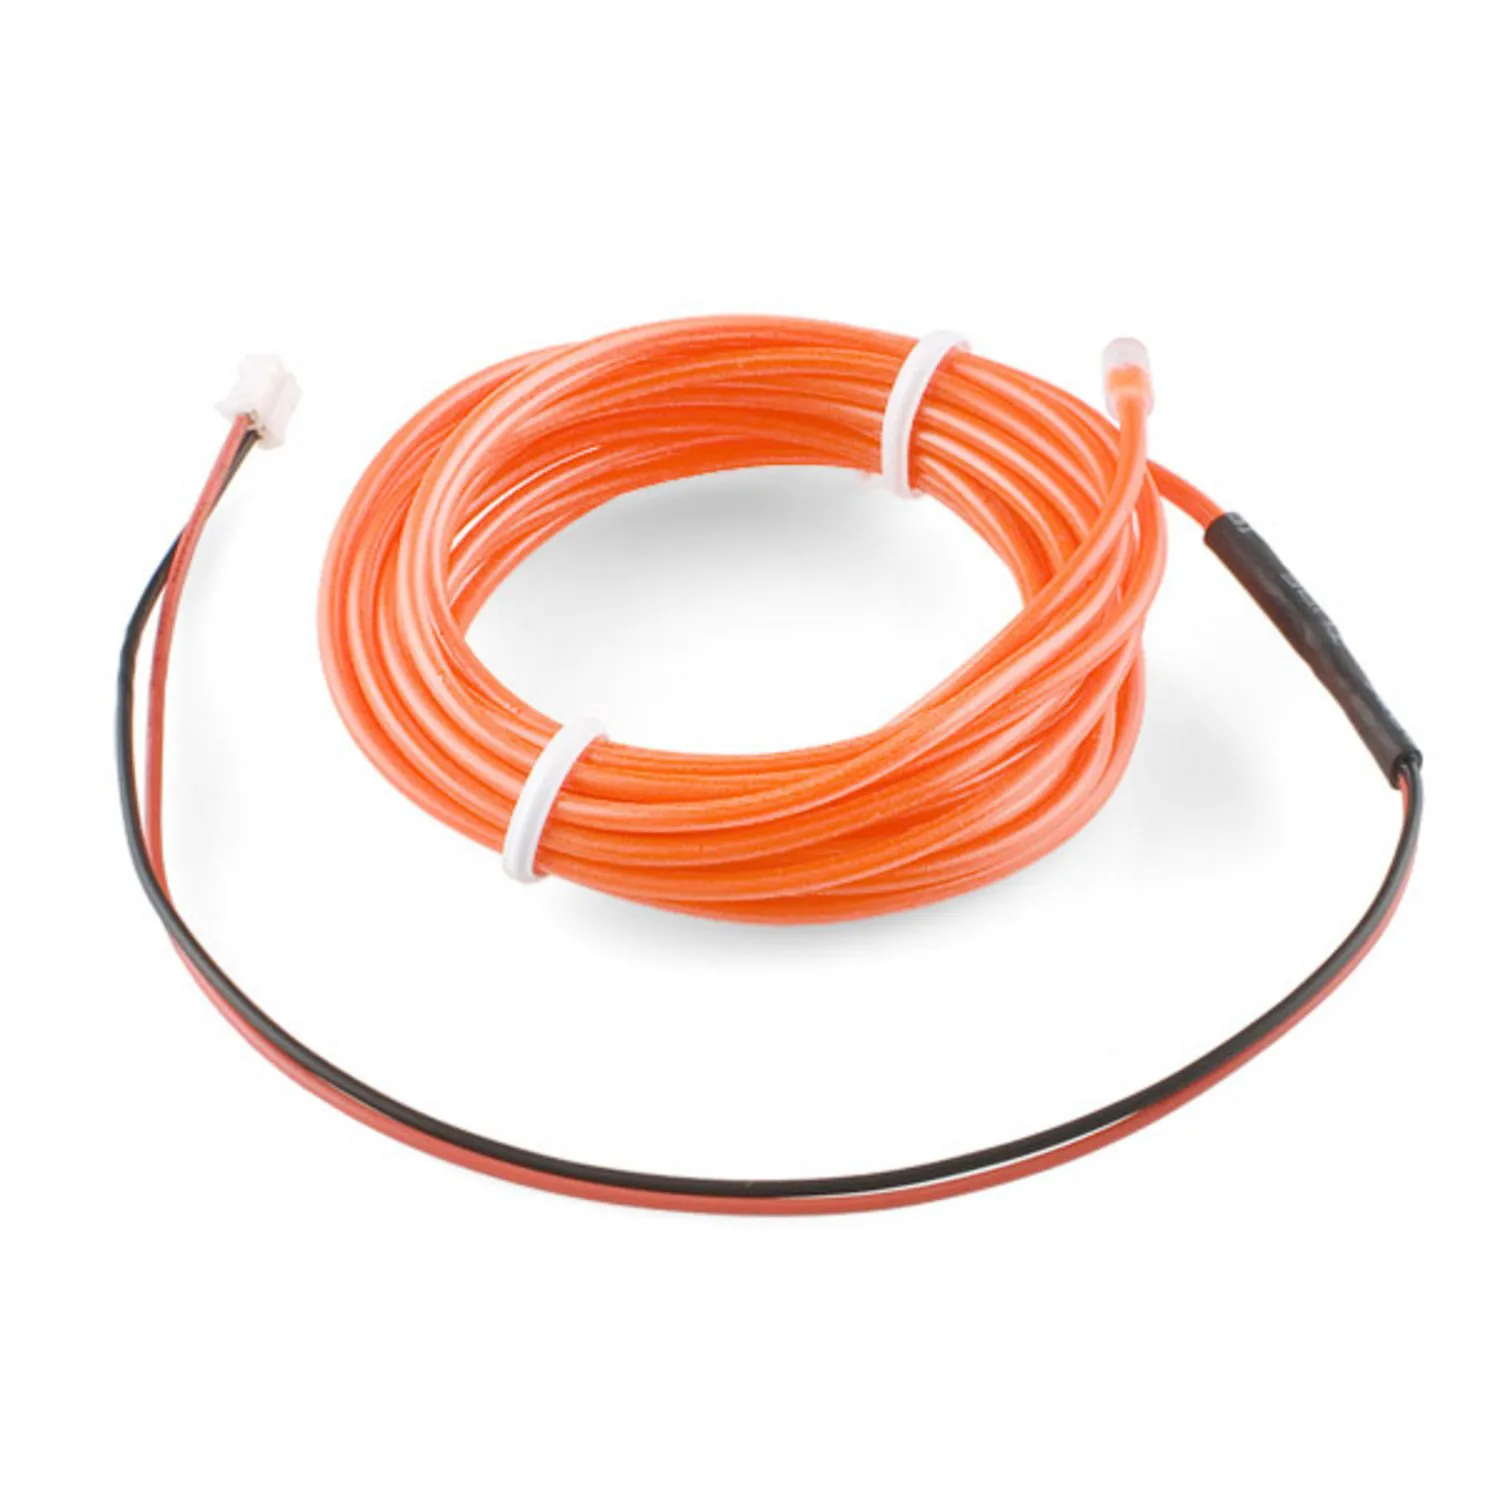 Photo of EL Wire - Orange 3m